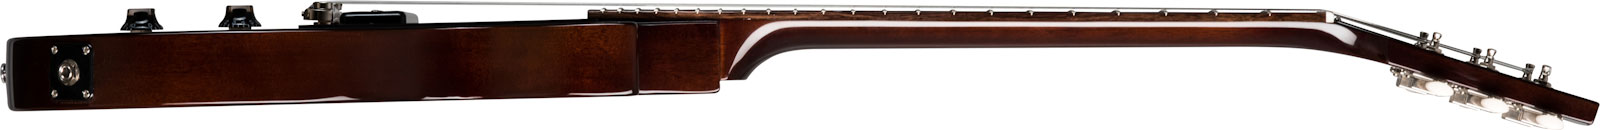 Gibson Les Paul Junior Original P90 Ht Rw - Vintage Tobacco Burst - Guitarra eléctrica de corte único. - Variation 2